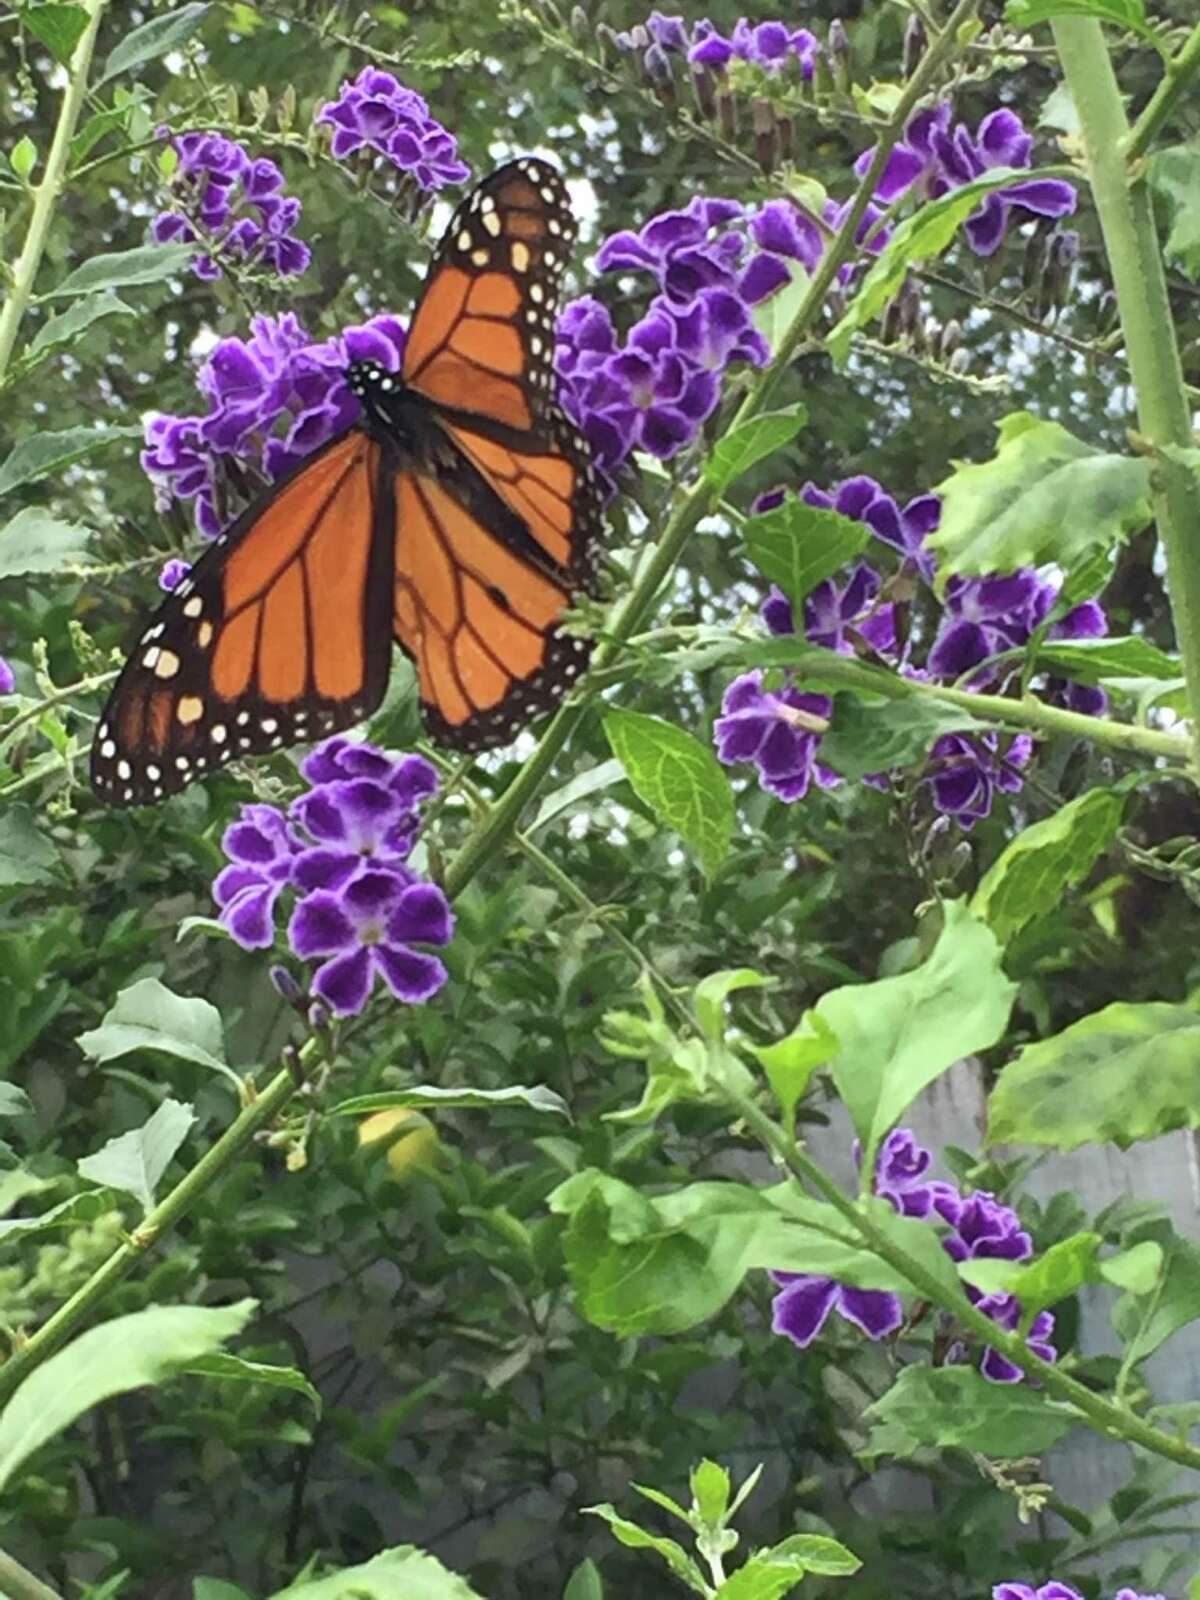 Purple duranta is a favorite of butterflies.